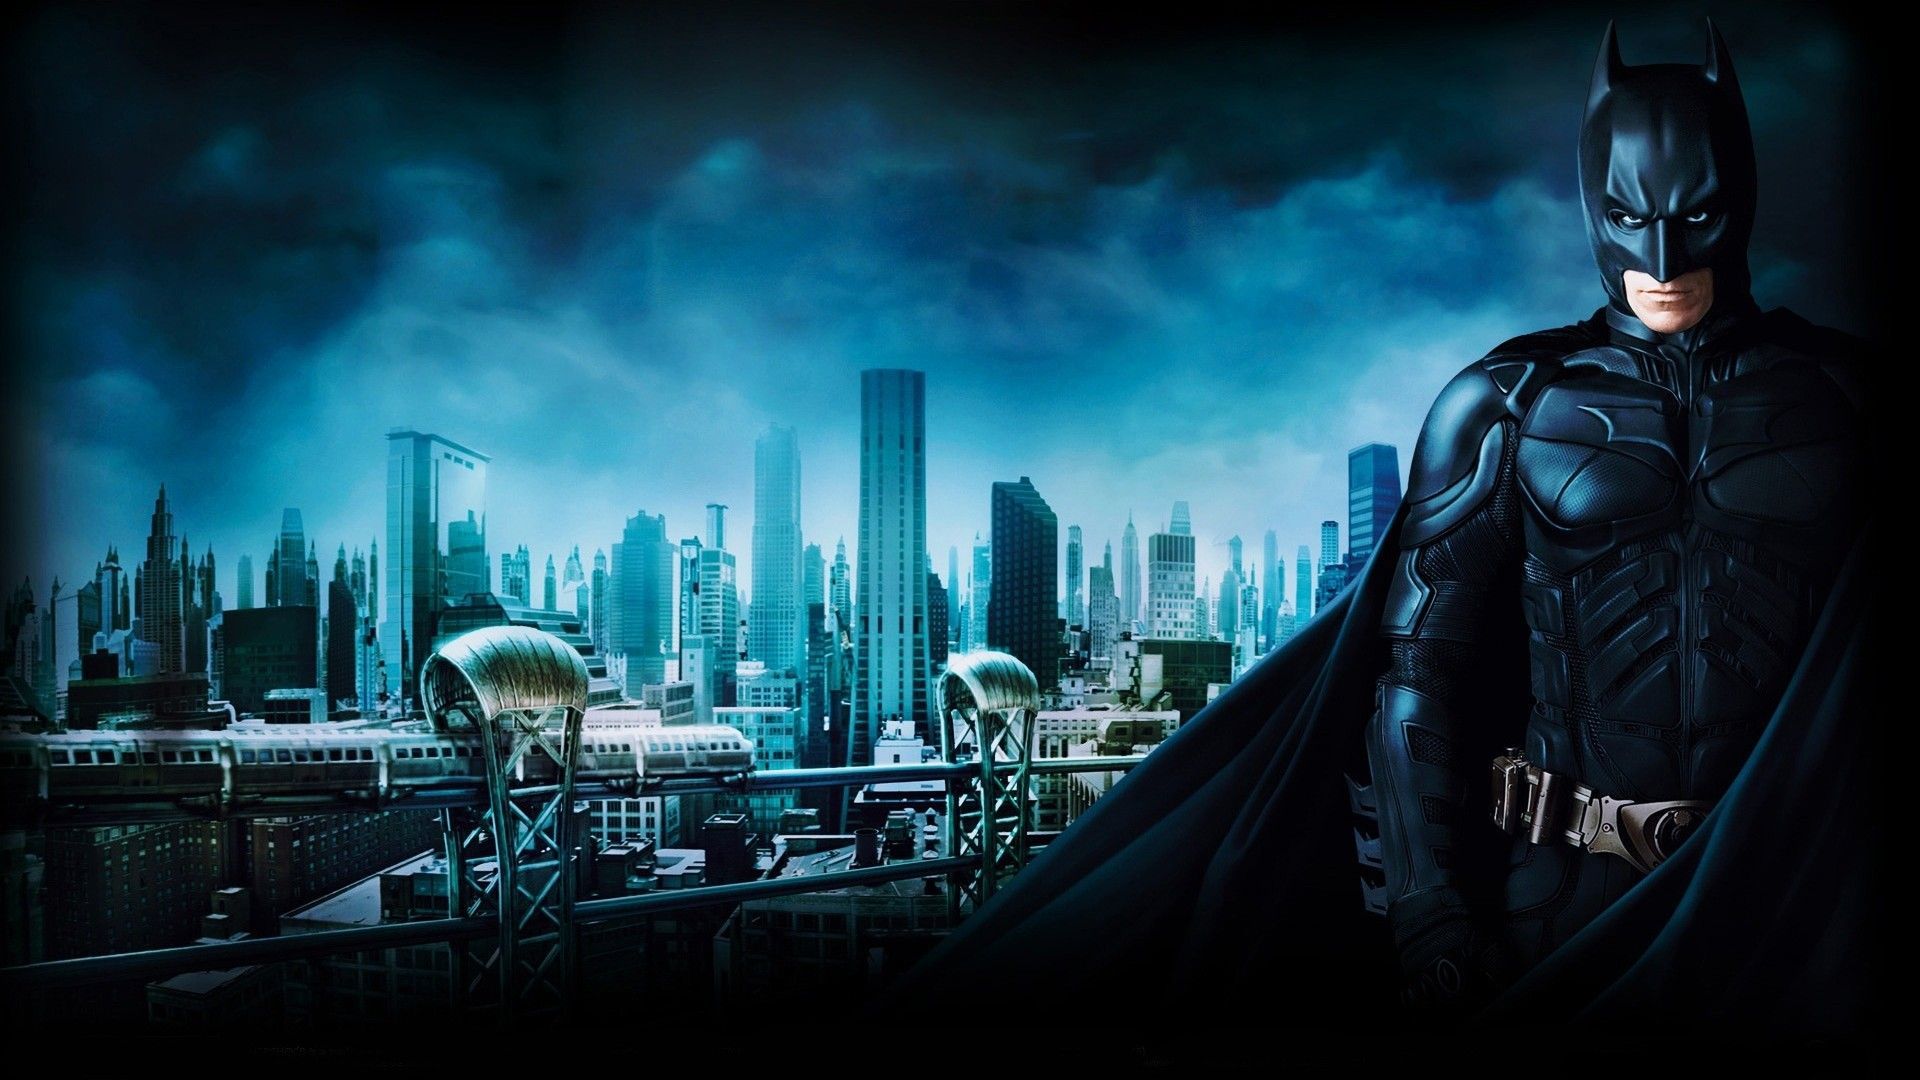 Batman Begins Gotham Train image HD Wallpaper. Dark knight wallpaper, Batman background, Batman the dark knight